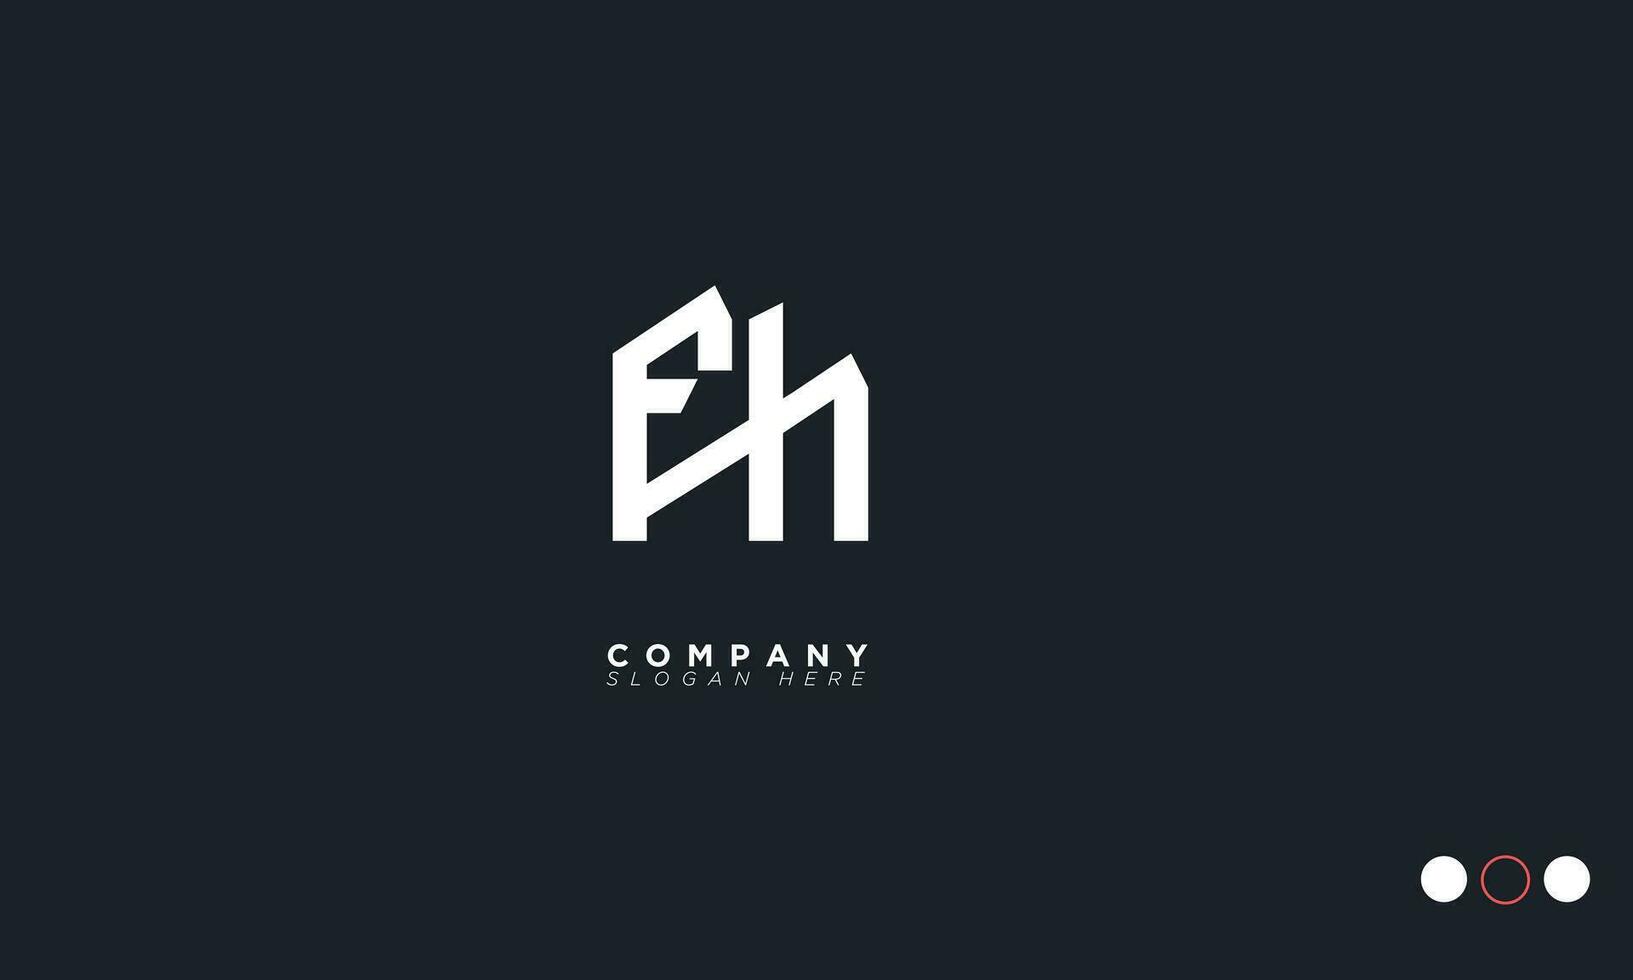 fh letras do alfabeto iniciais monograma logotipo hf, f e h vetor